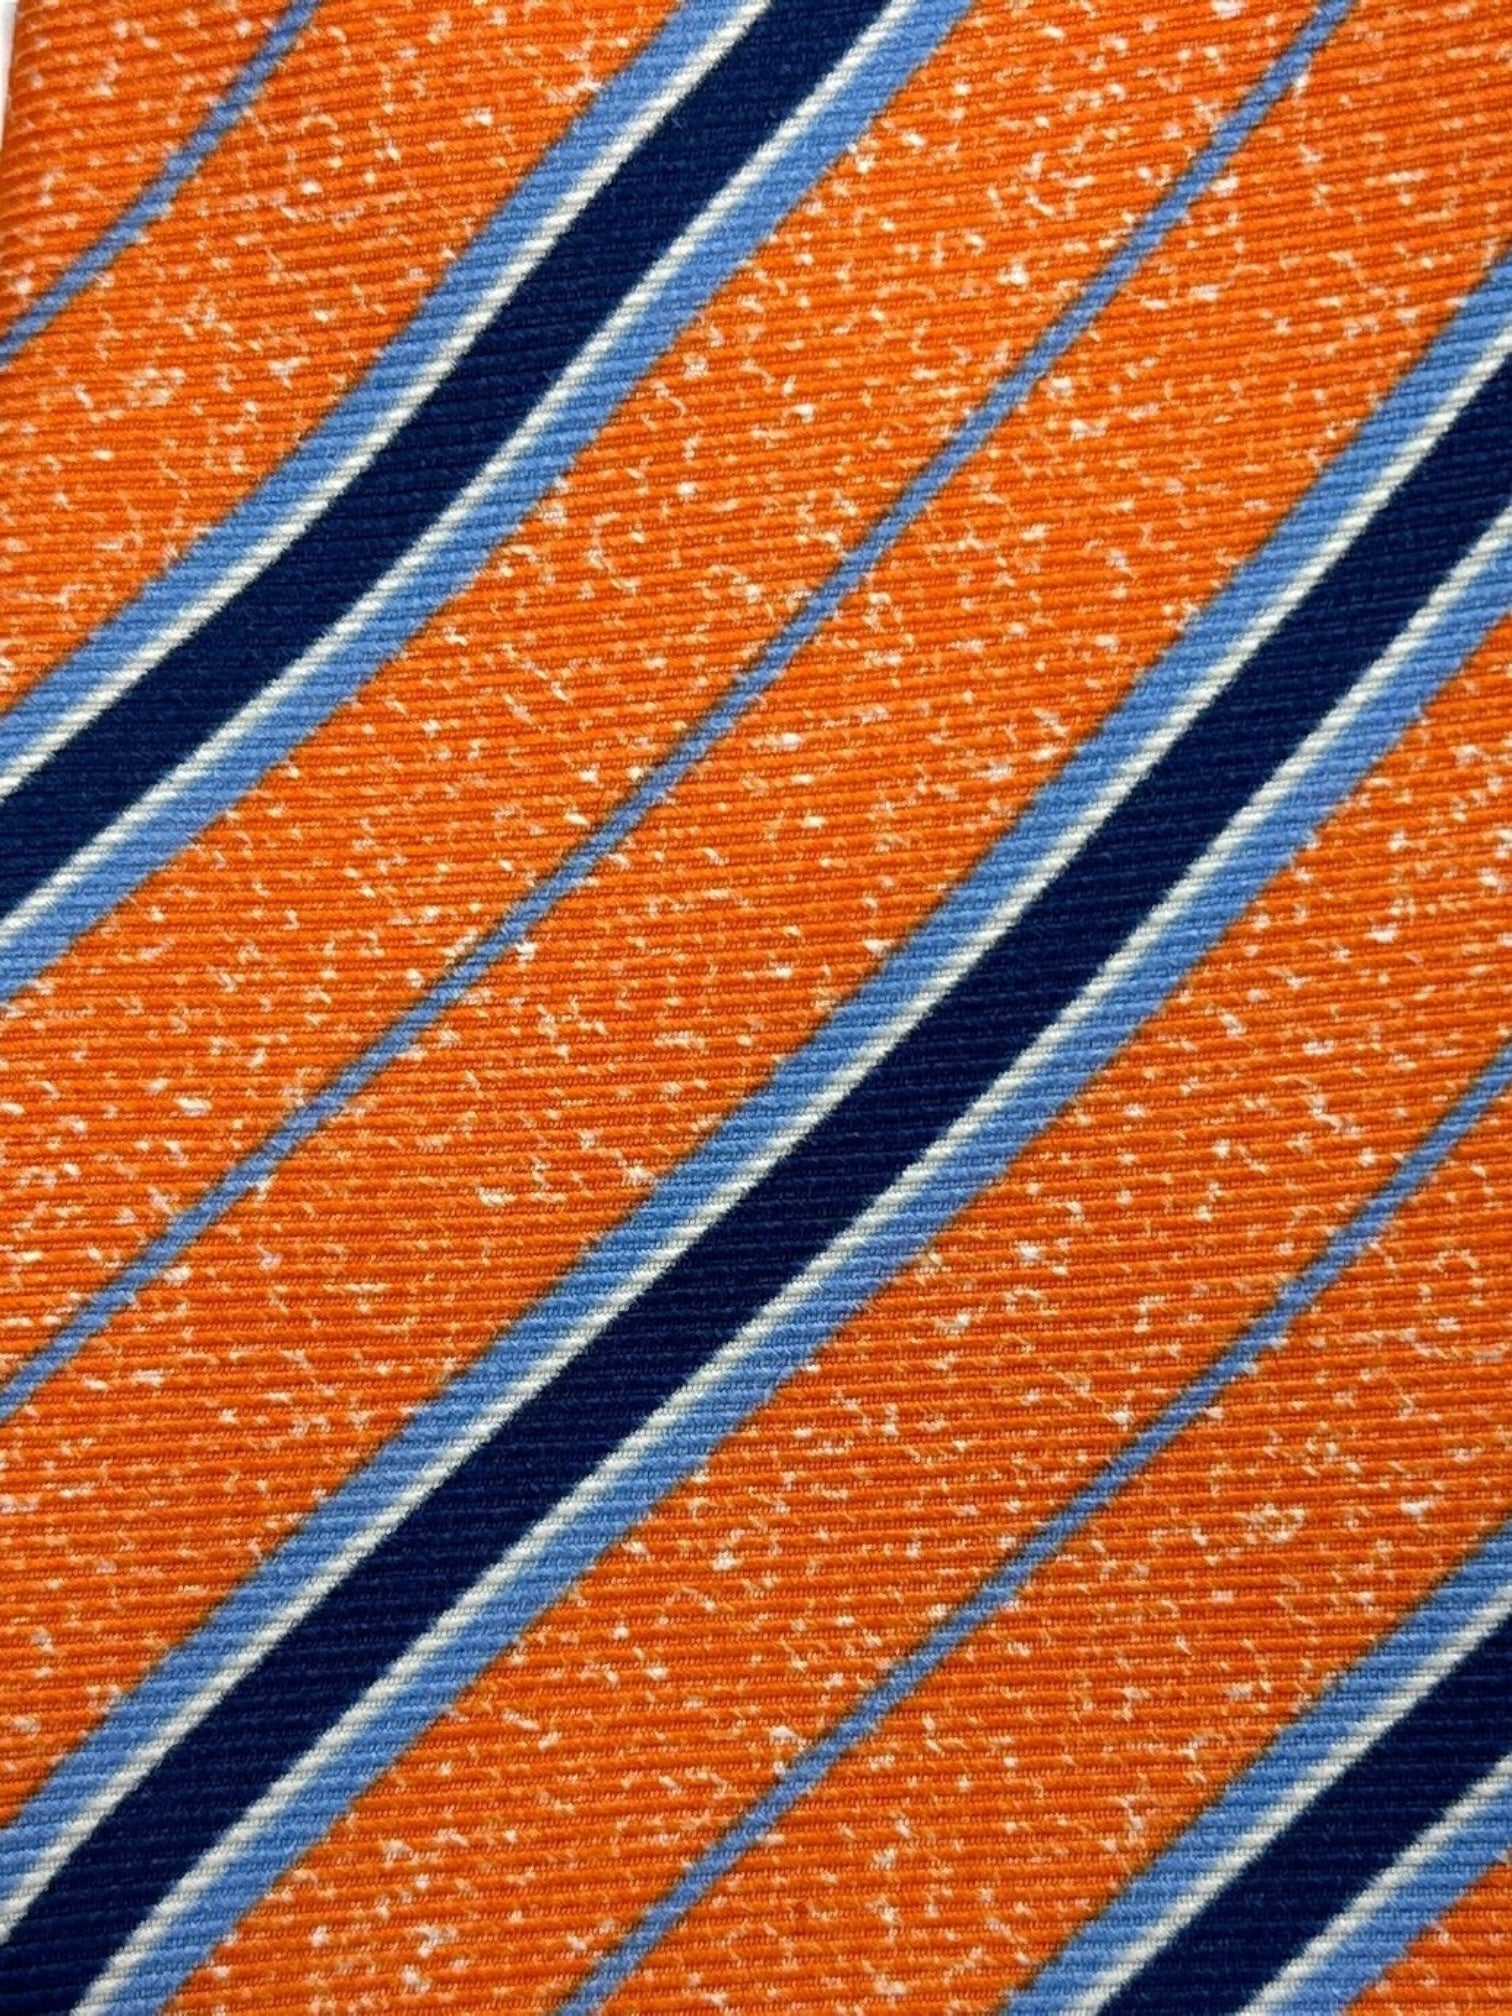 Kiton 7-Fold Orange and Blue Stripe Tie